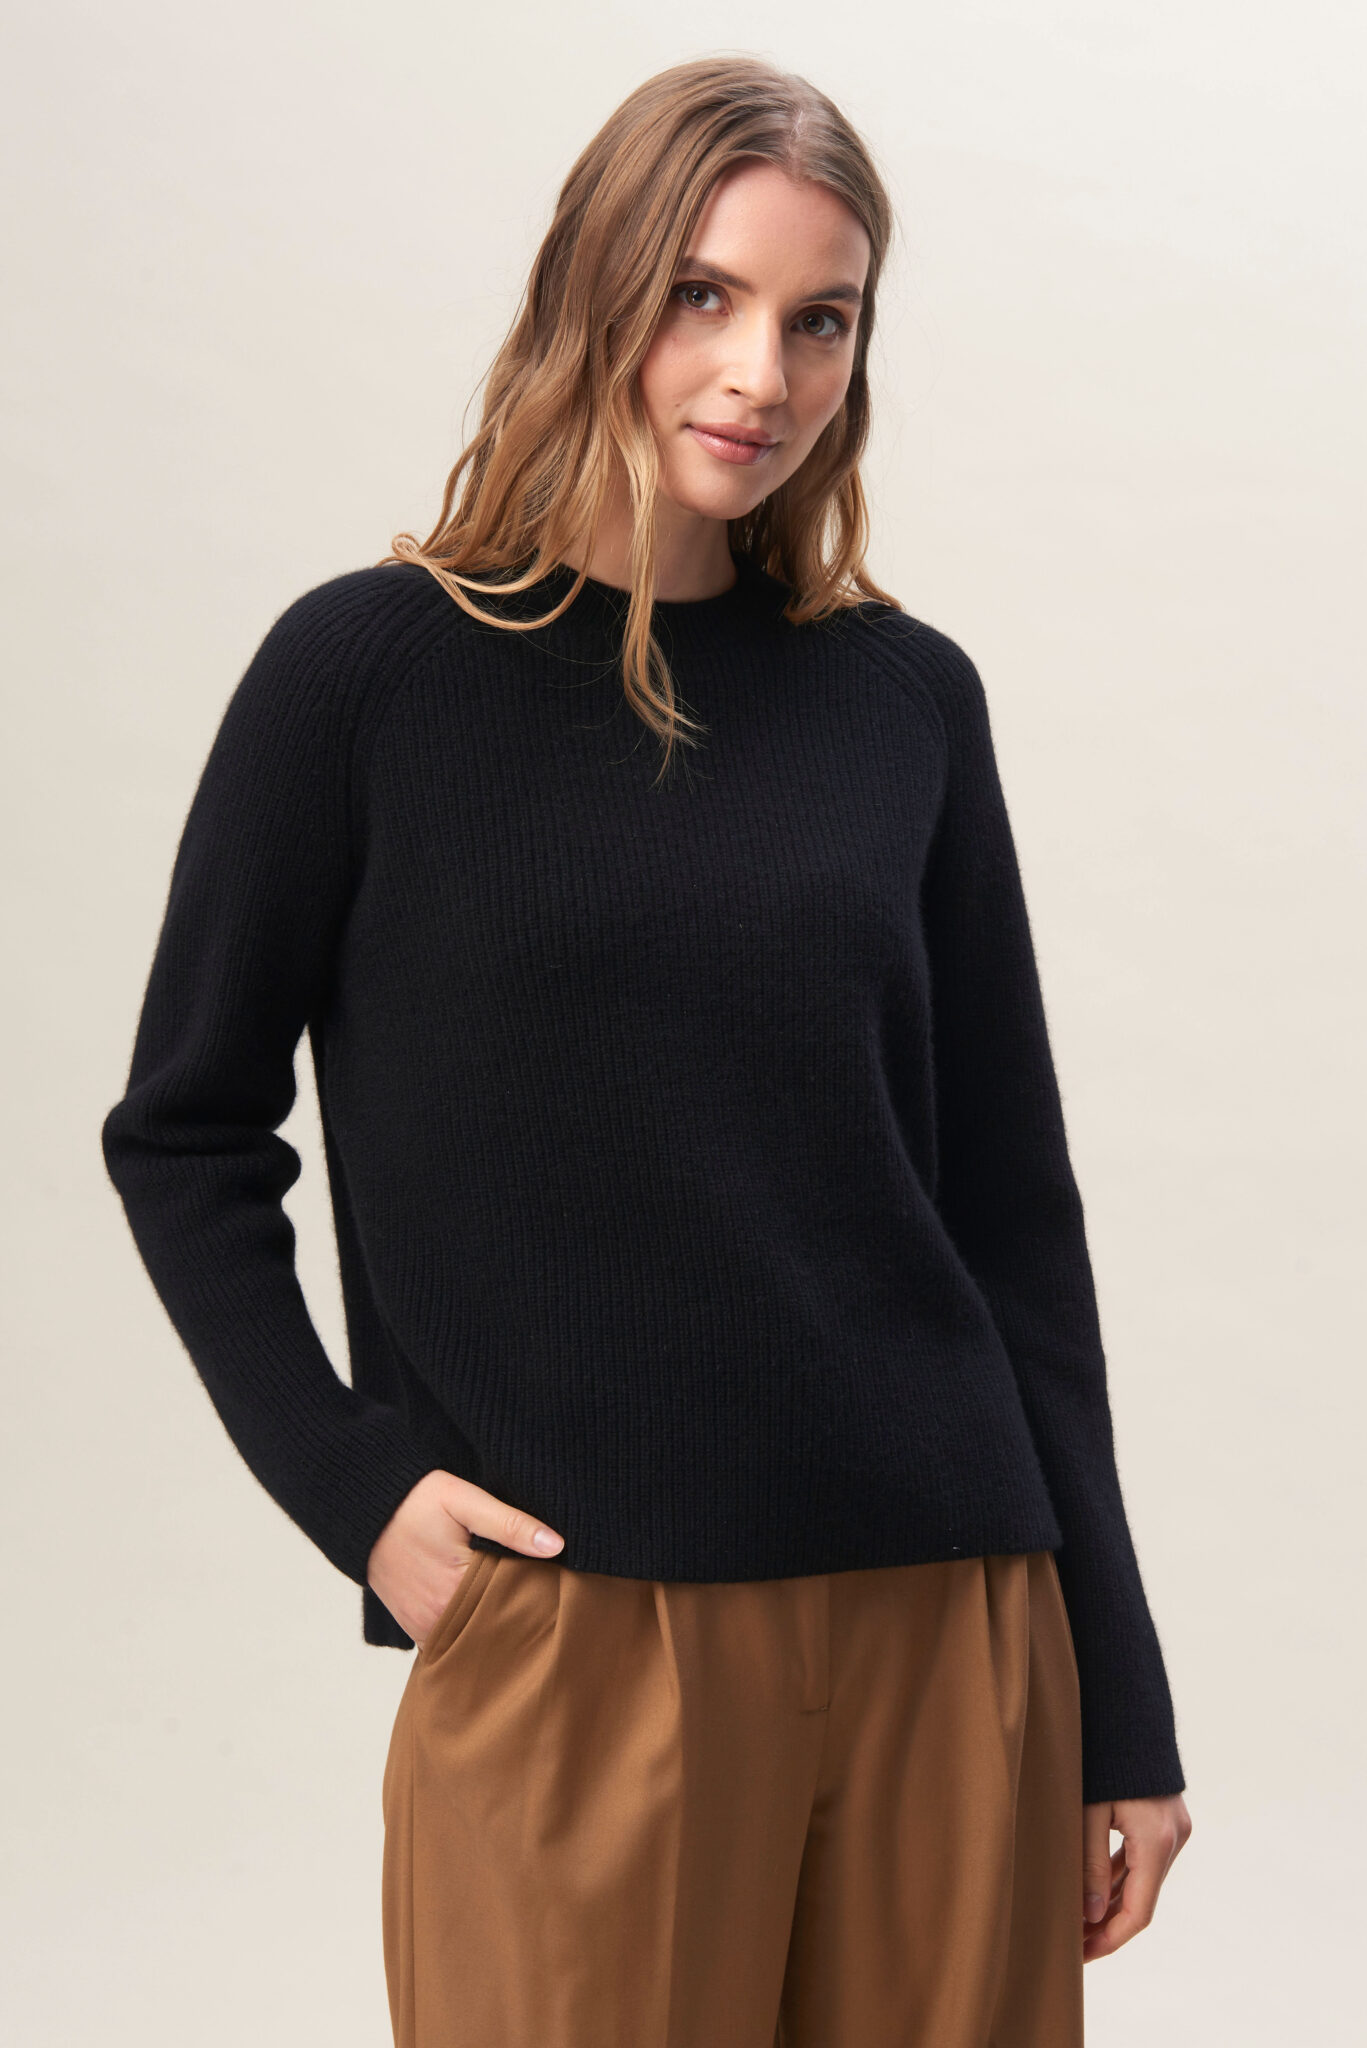 AIDRIE sweater – Kashette